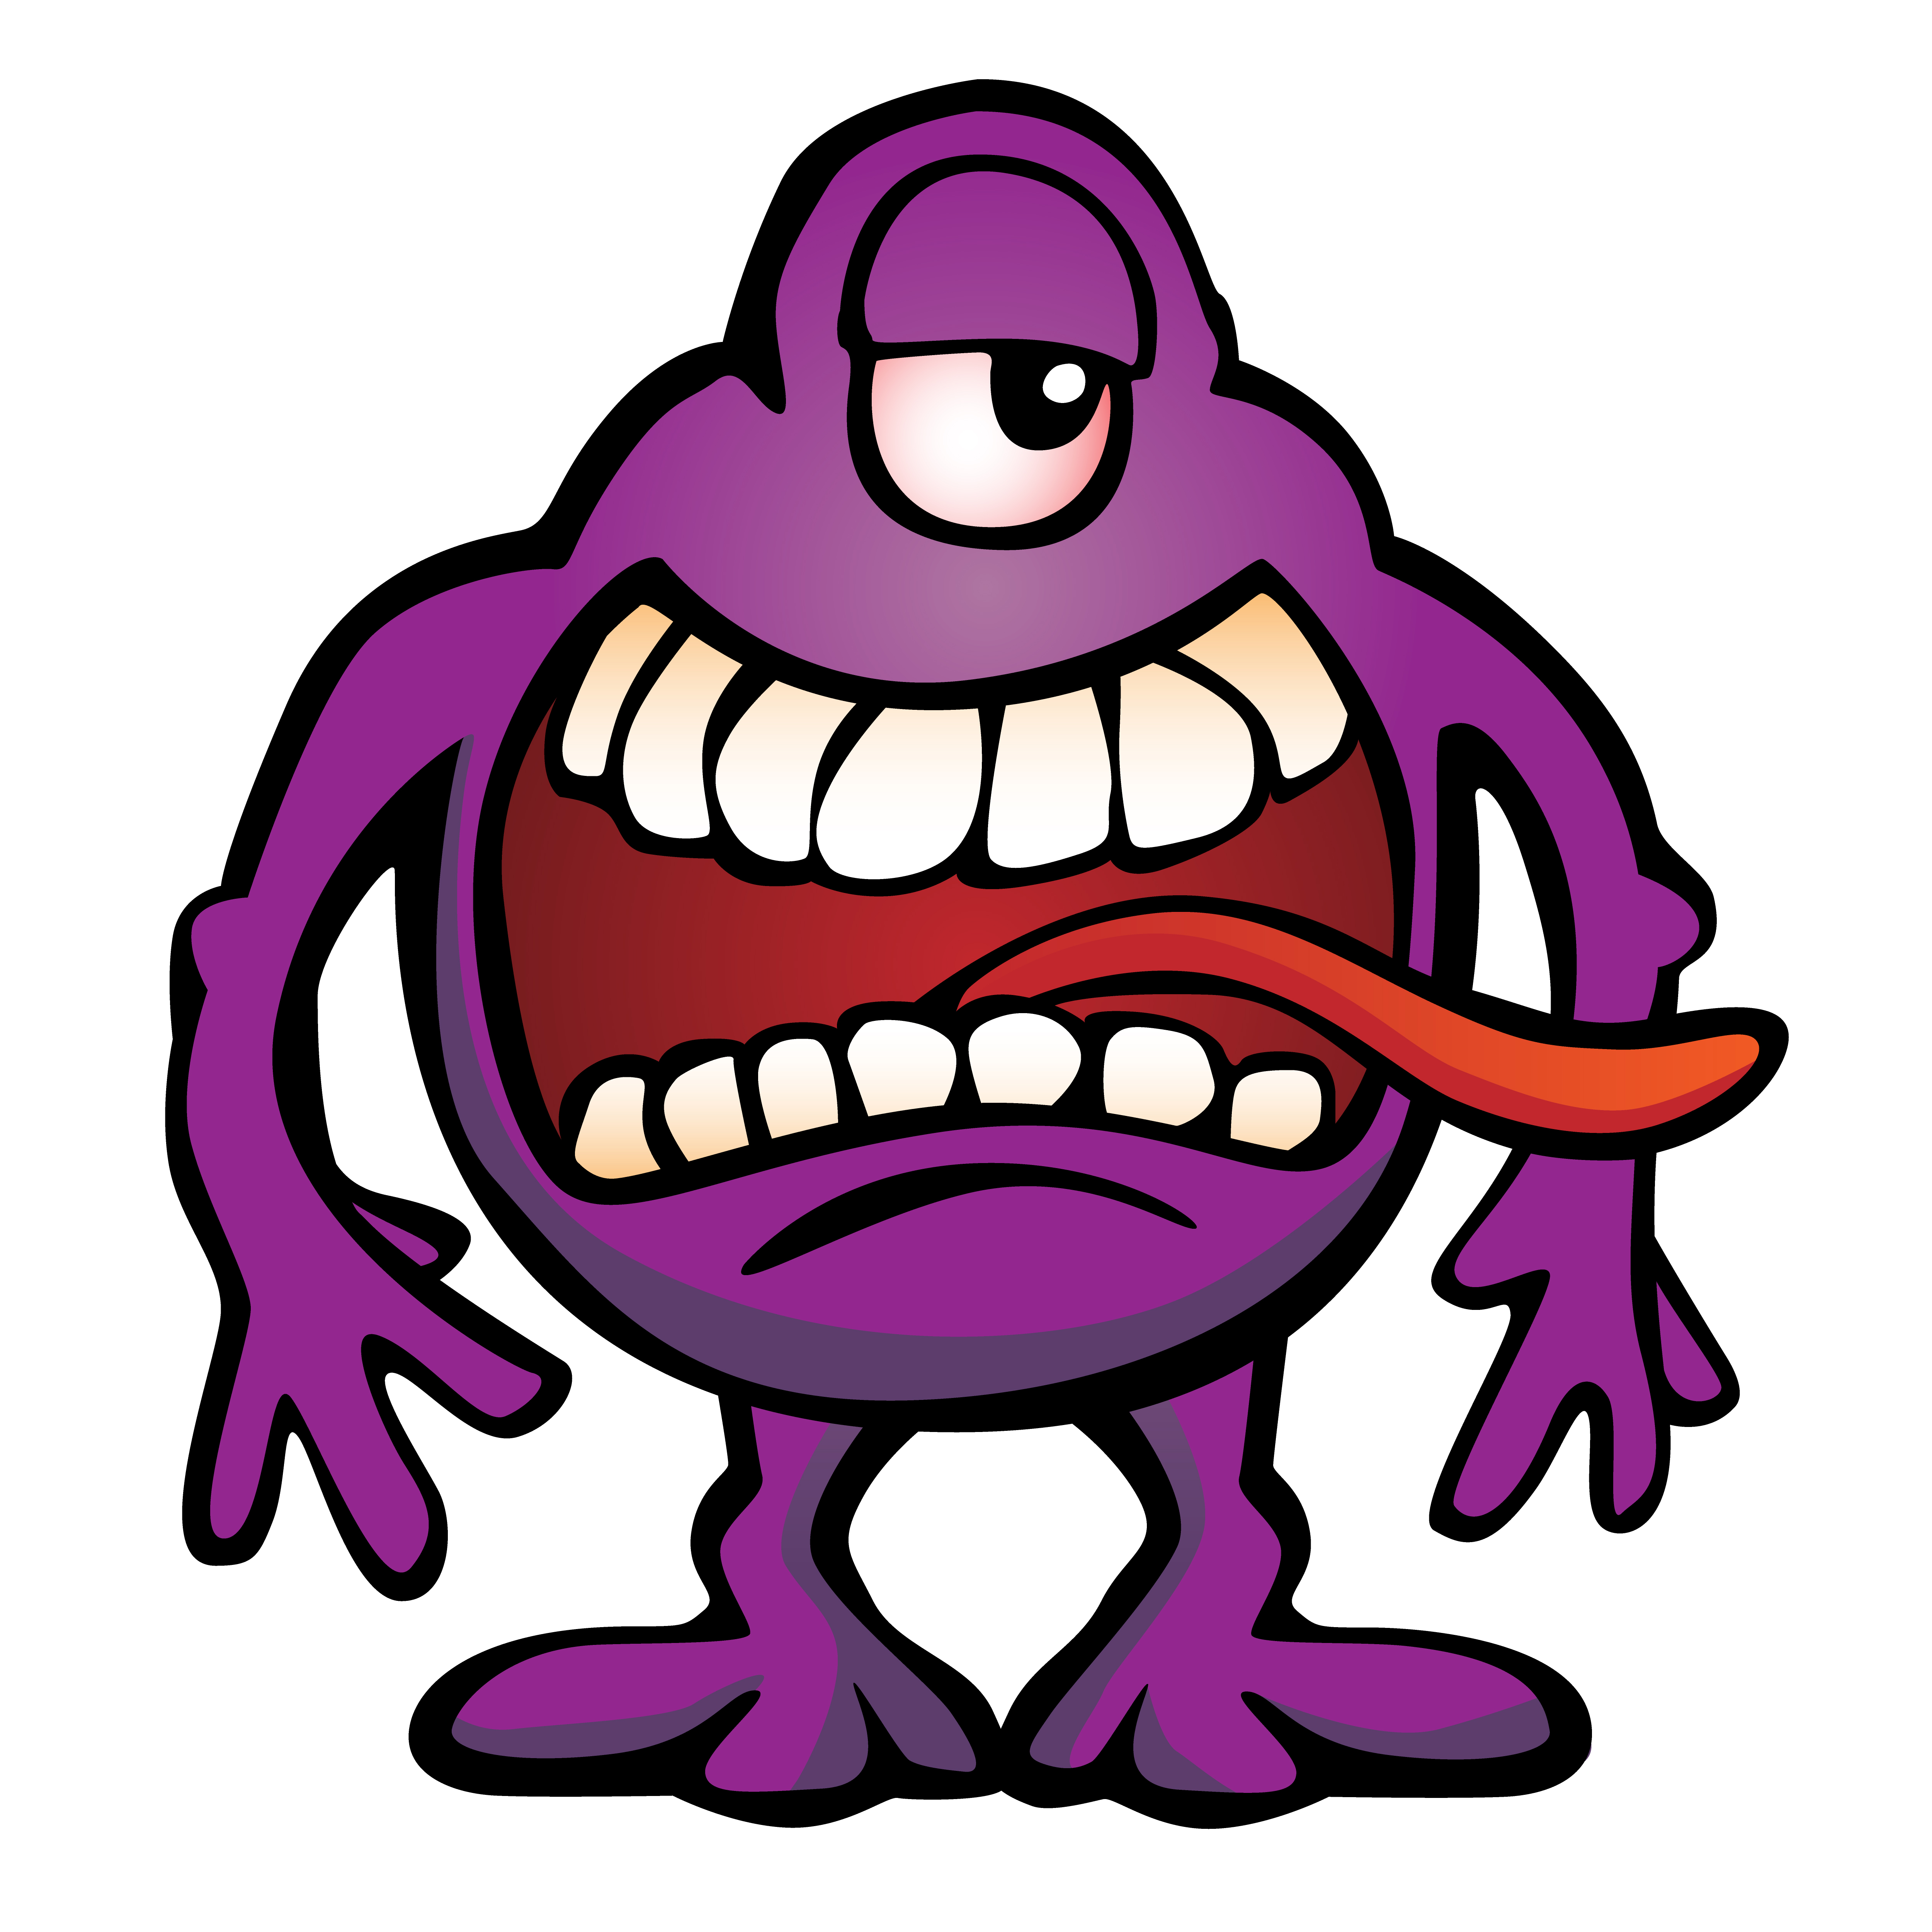 Silly Monster Creature Cartoon Vector Illustration 373185 Vector Art at ...